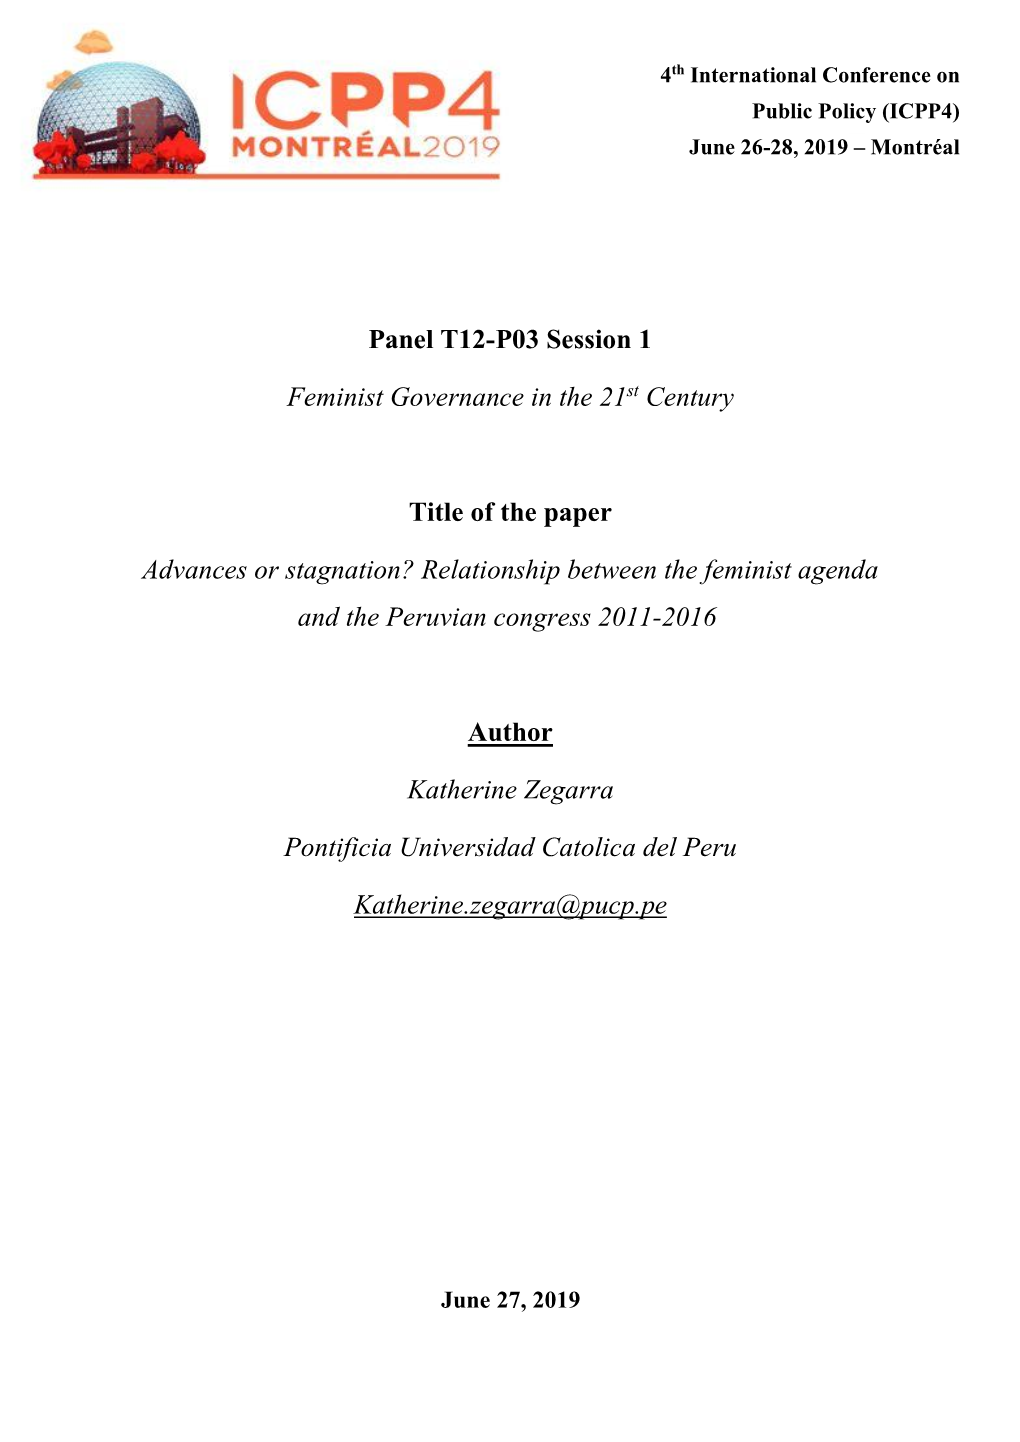 Panel T12-P03 Session 1 Feminist Governance in the 21St Century